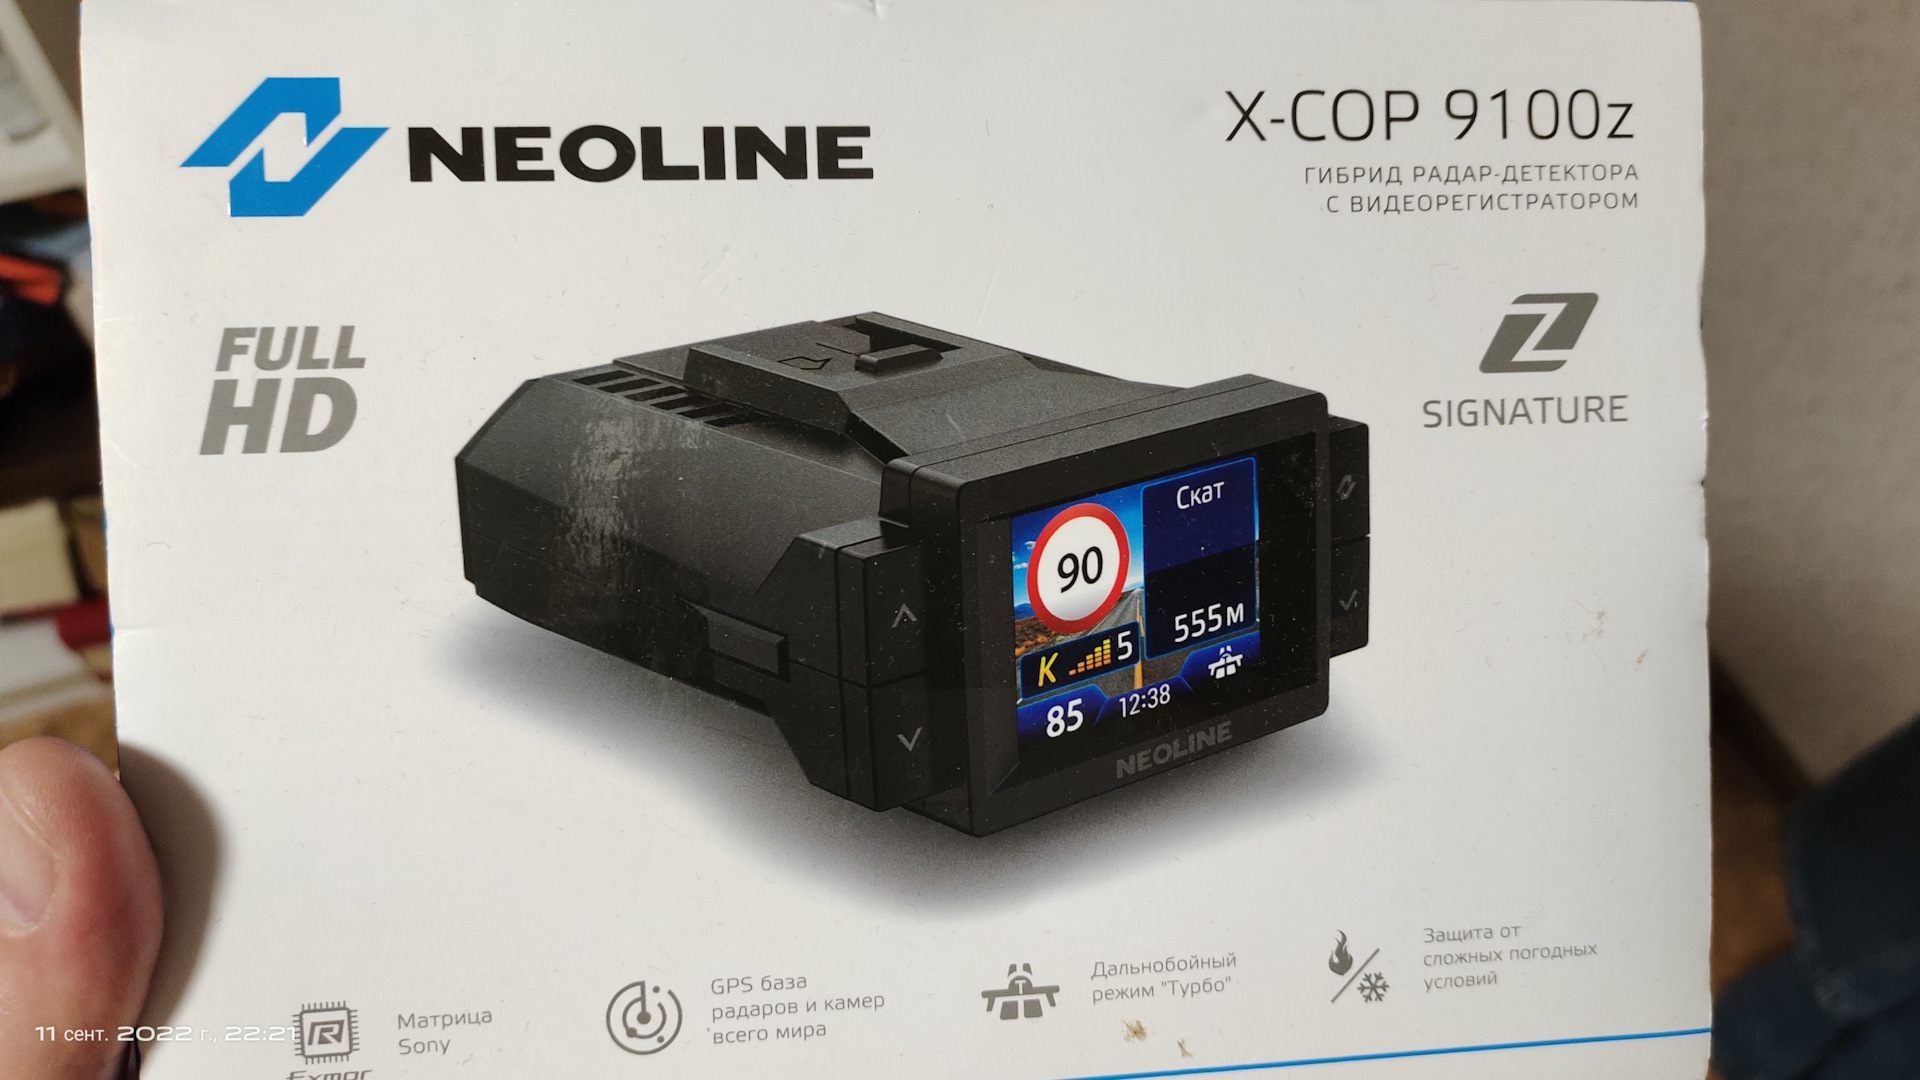 Neoline x cop 9100z. X-cop 9100. Neoline x-cop 9100. Видеорегистратор Neoline x-cop 9100s.